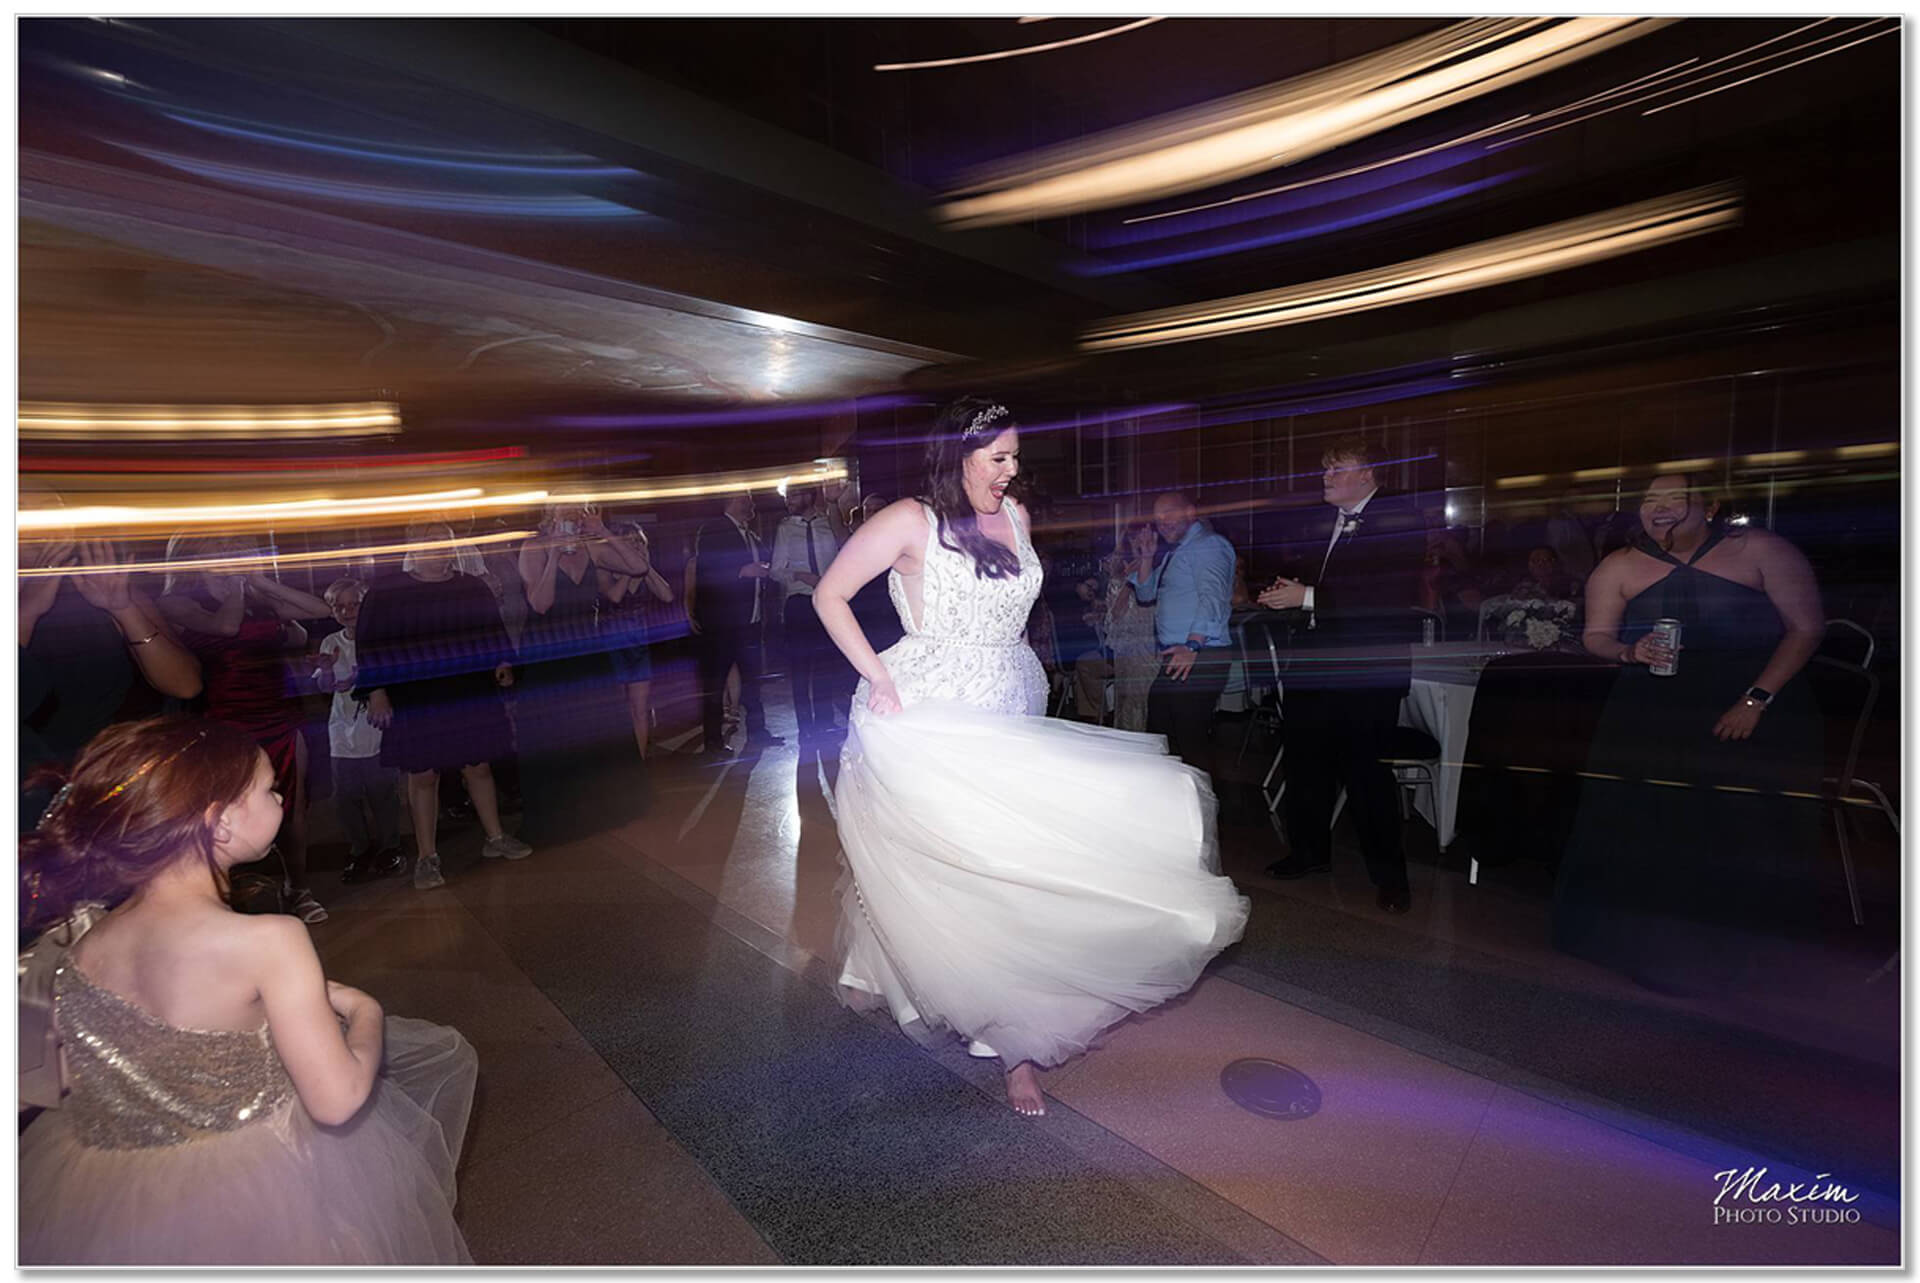 Cincinnati Museum Center Reception dancing bride